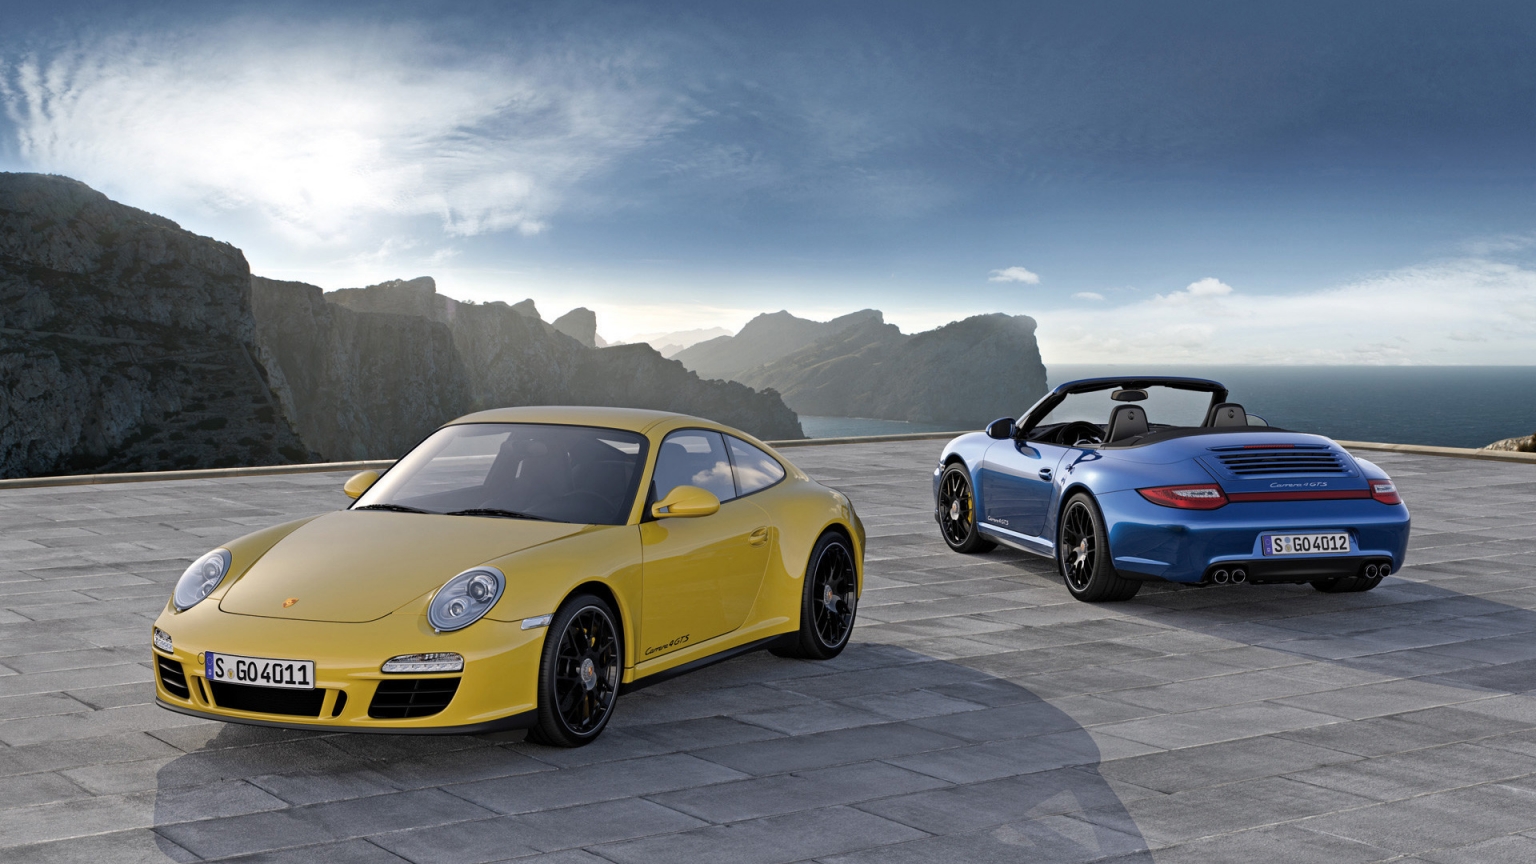 Porsche 911 Carrera 4 GTS Duo for 1536 x 864 HDTV resolution